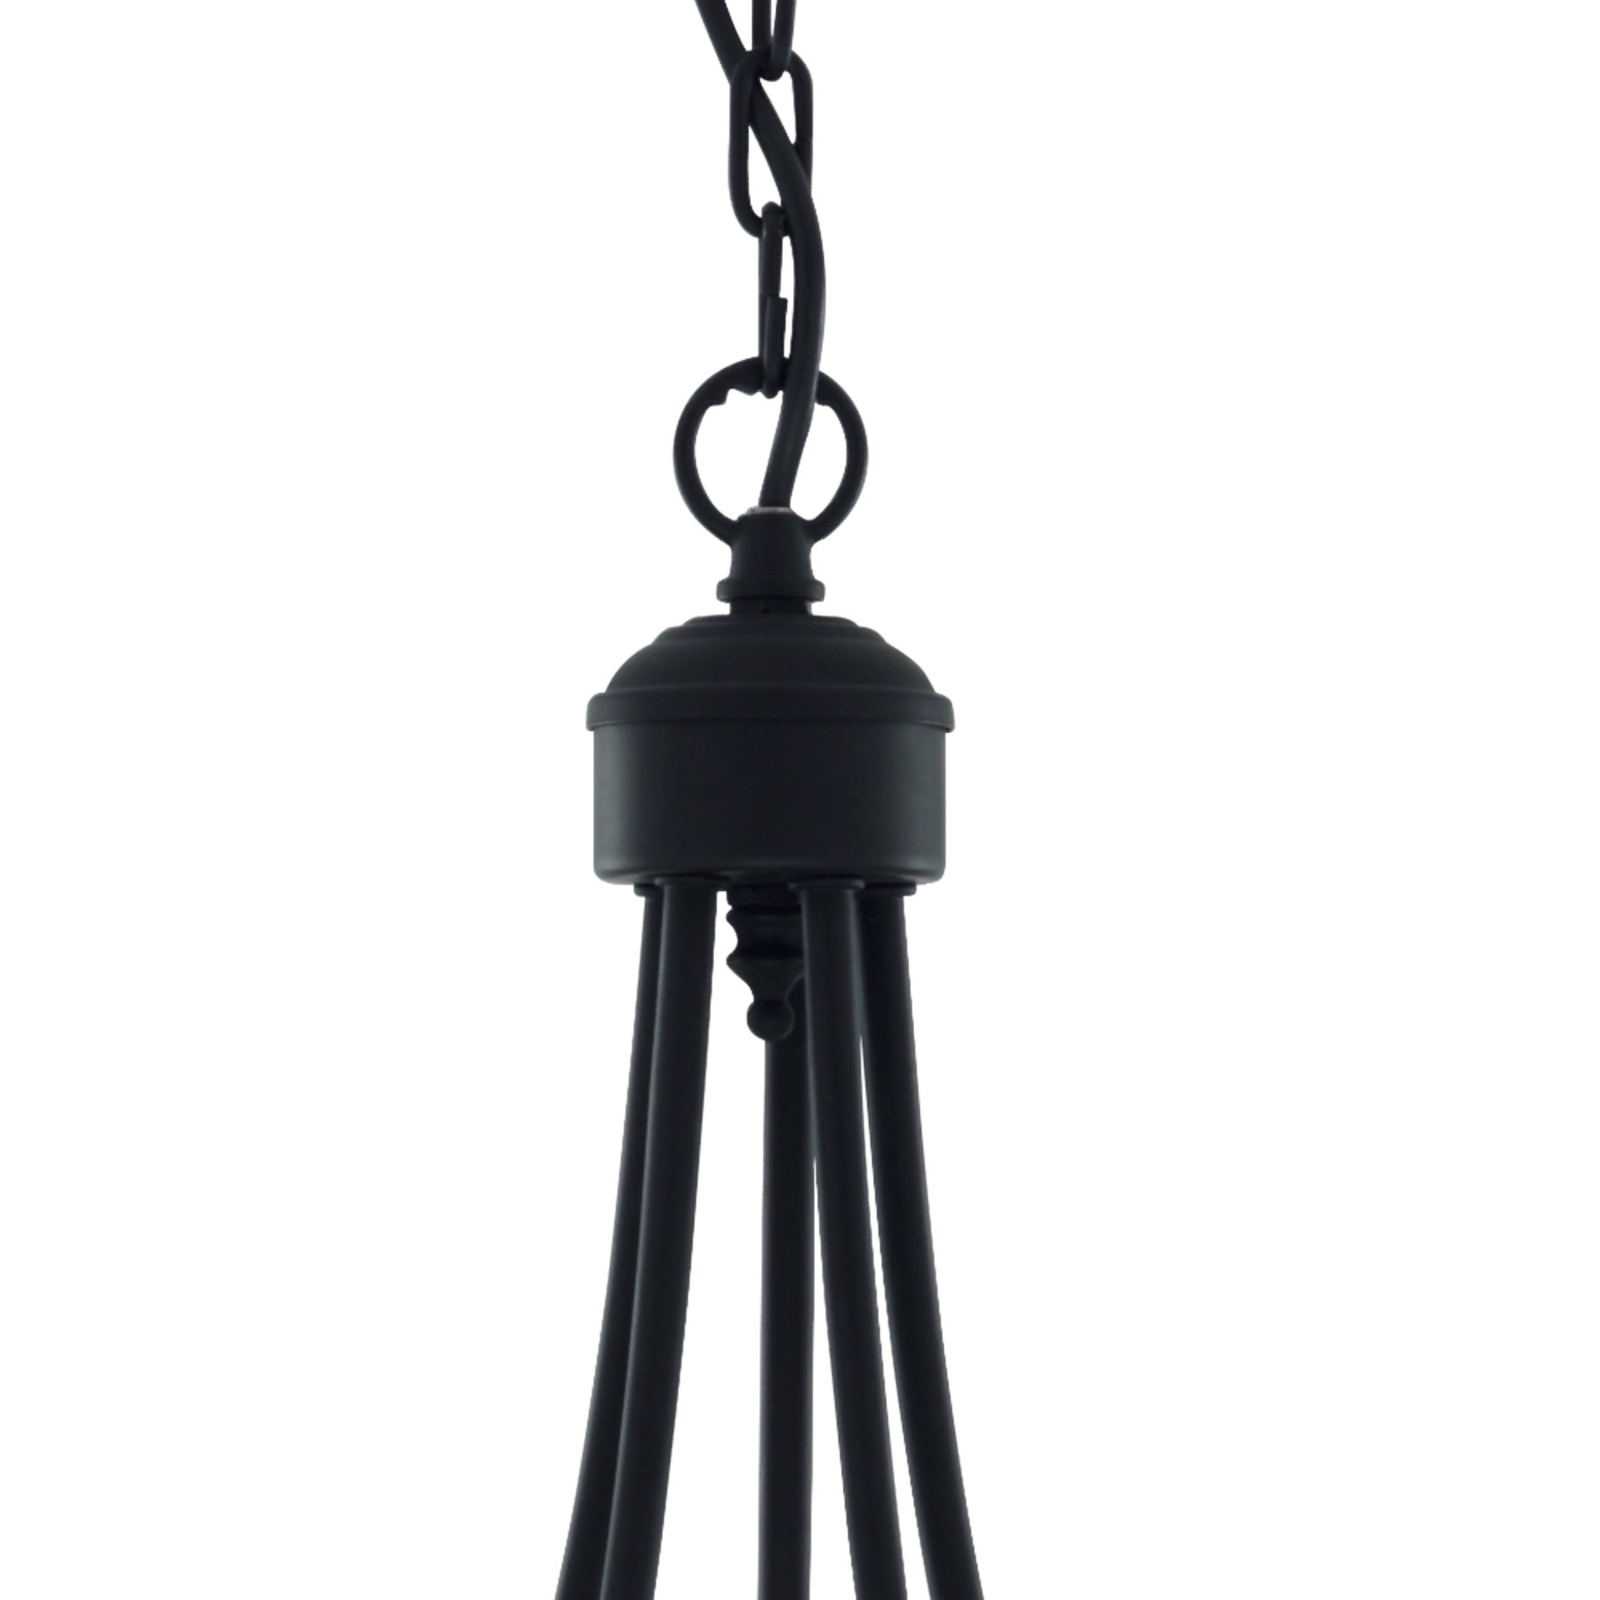 Maypole chandelier matt black, 5-bulb